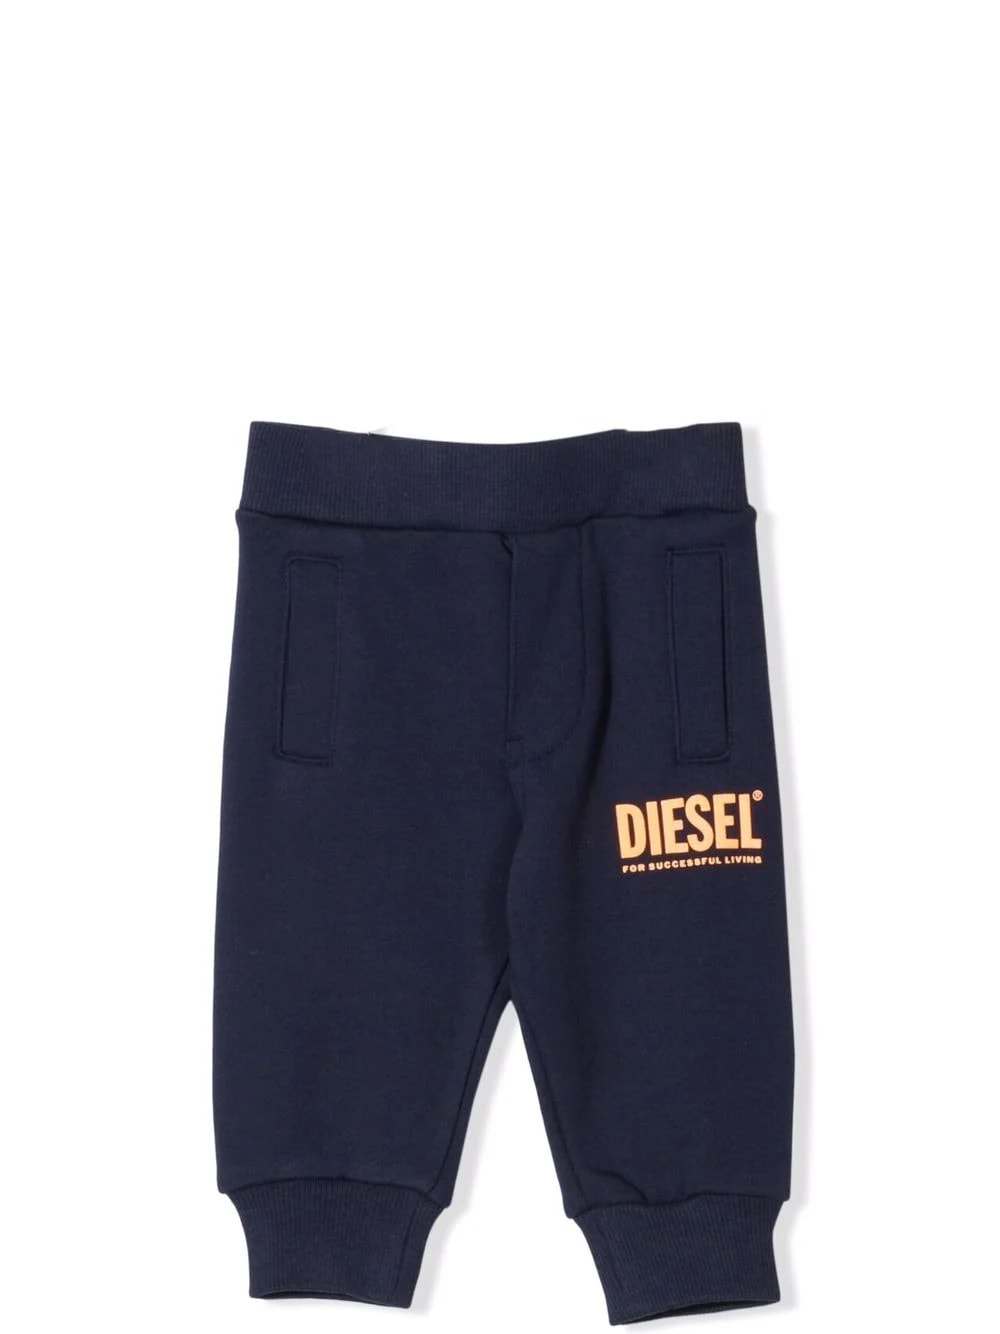 Diesel Sport Trousers